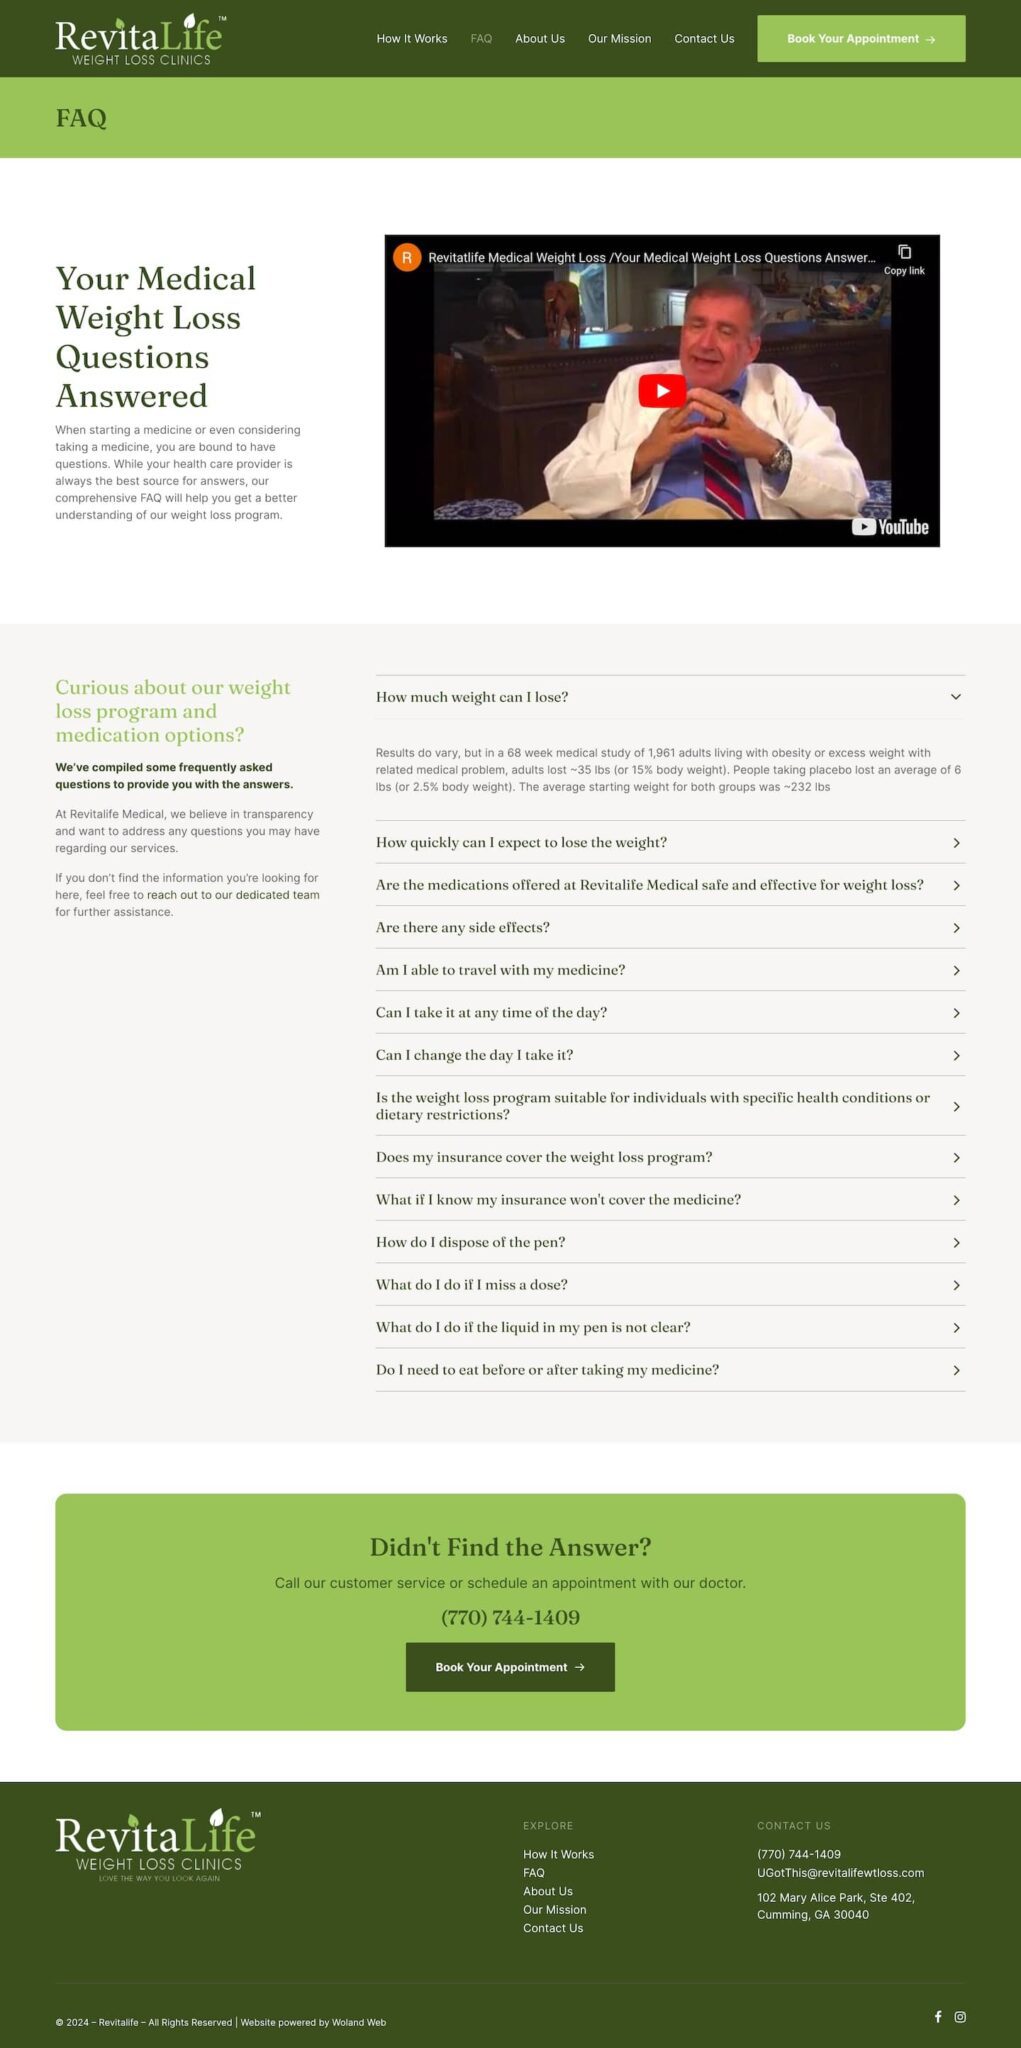 Revitalife website-screenshot of FAQ page